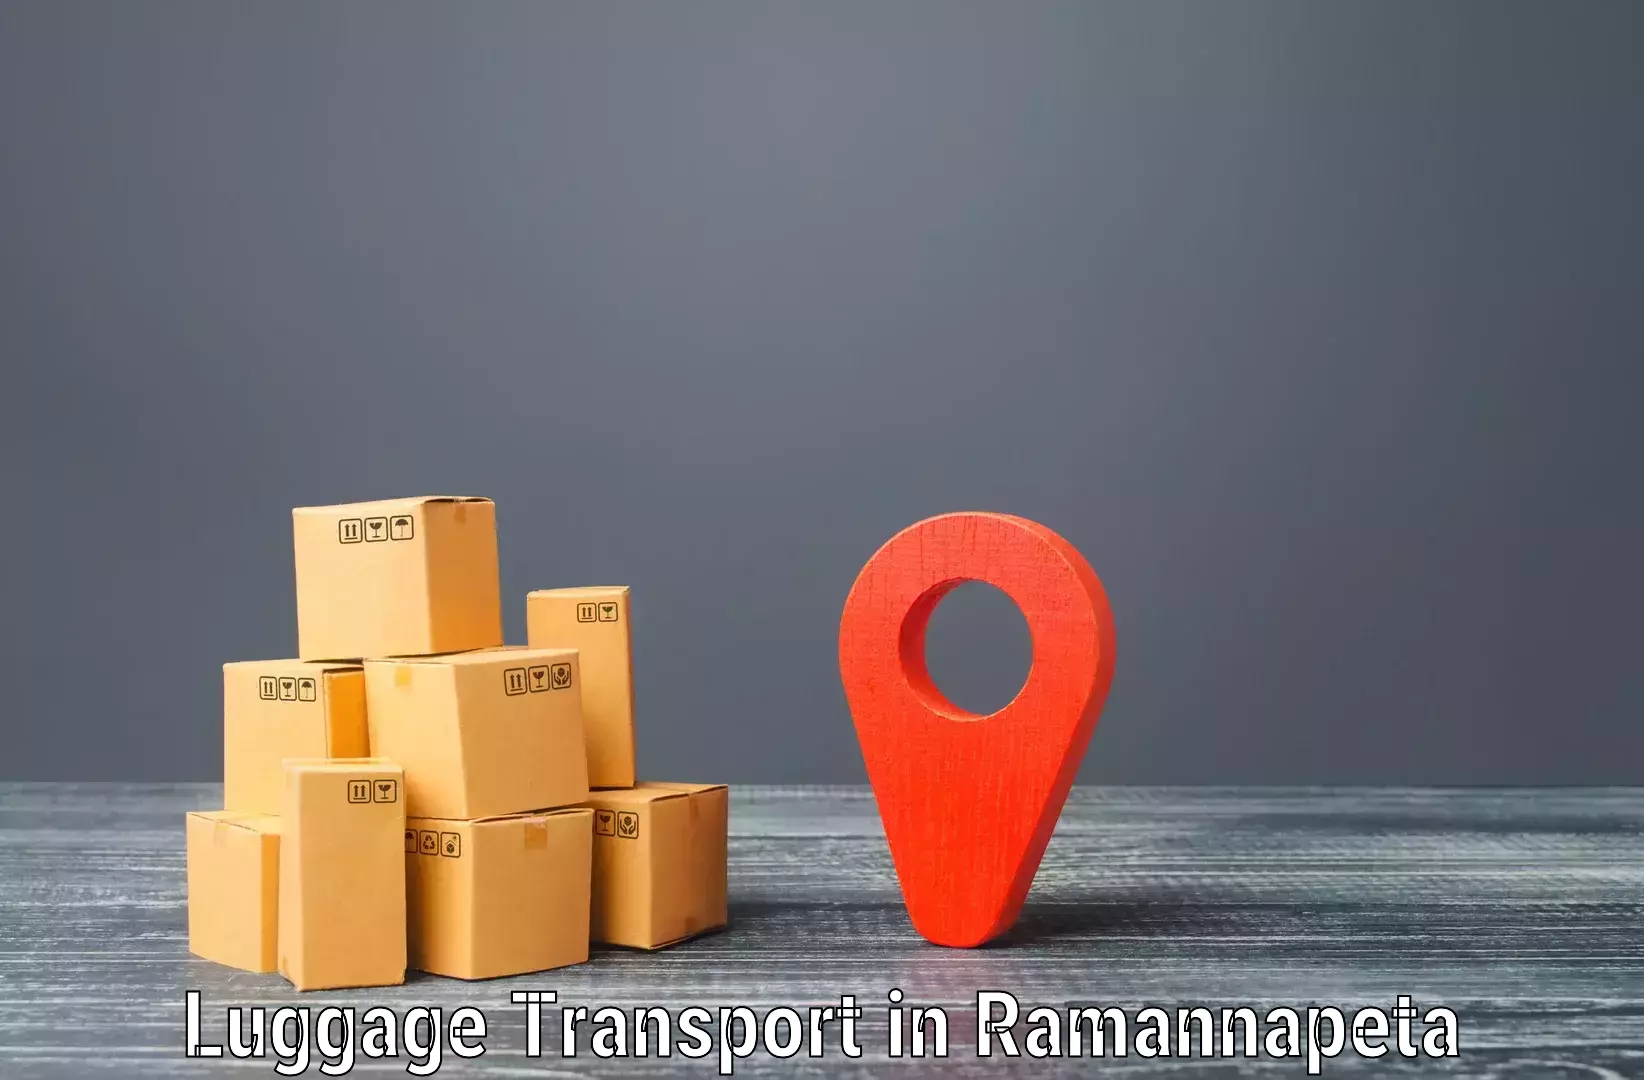 Luggage transfer service in Ramannapeta